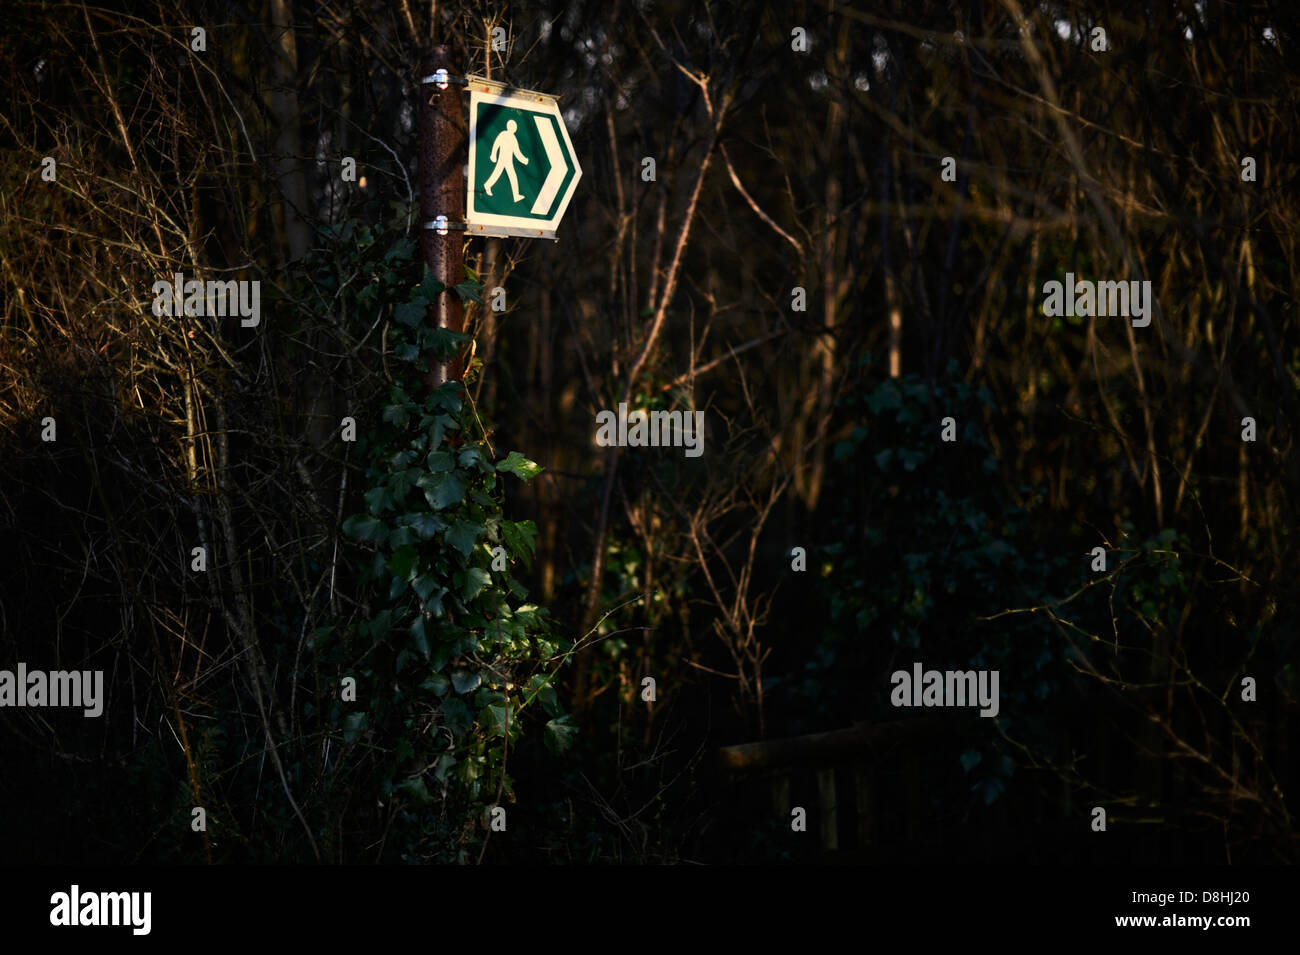 Metall Schild oder Wegpunkt im Wald Lllanrhystud, Wales, UK Stockfoto